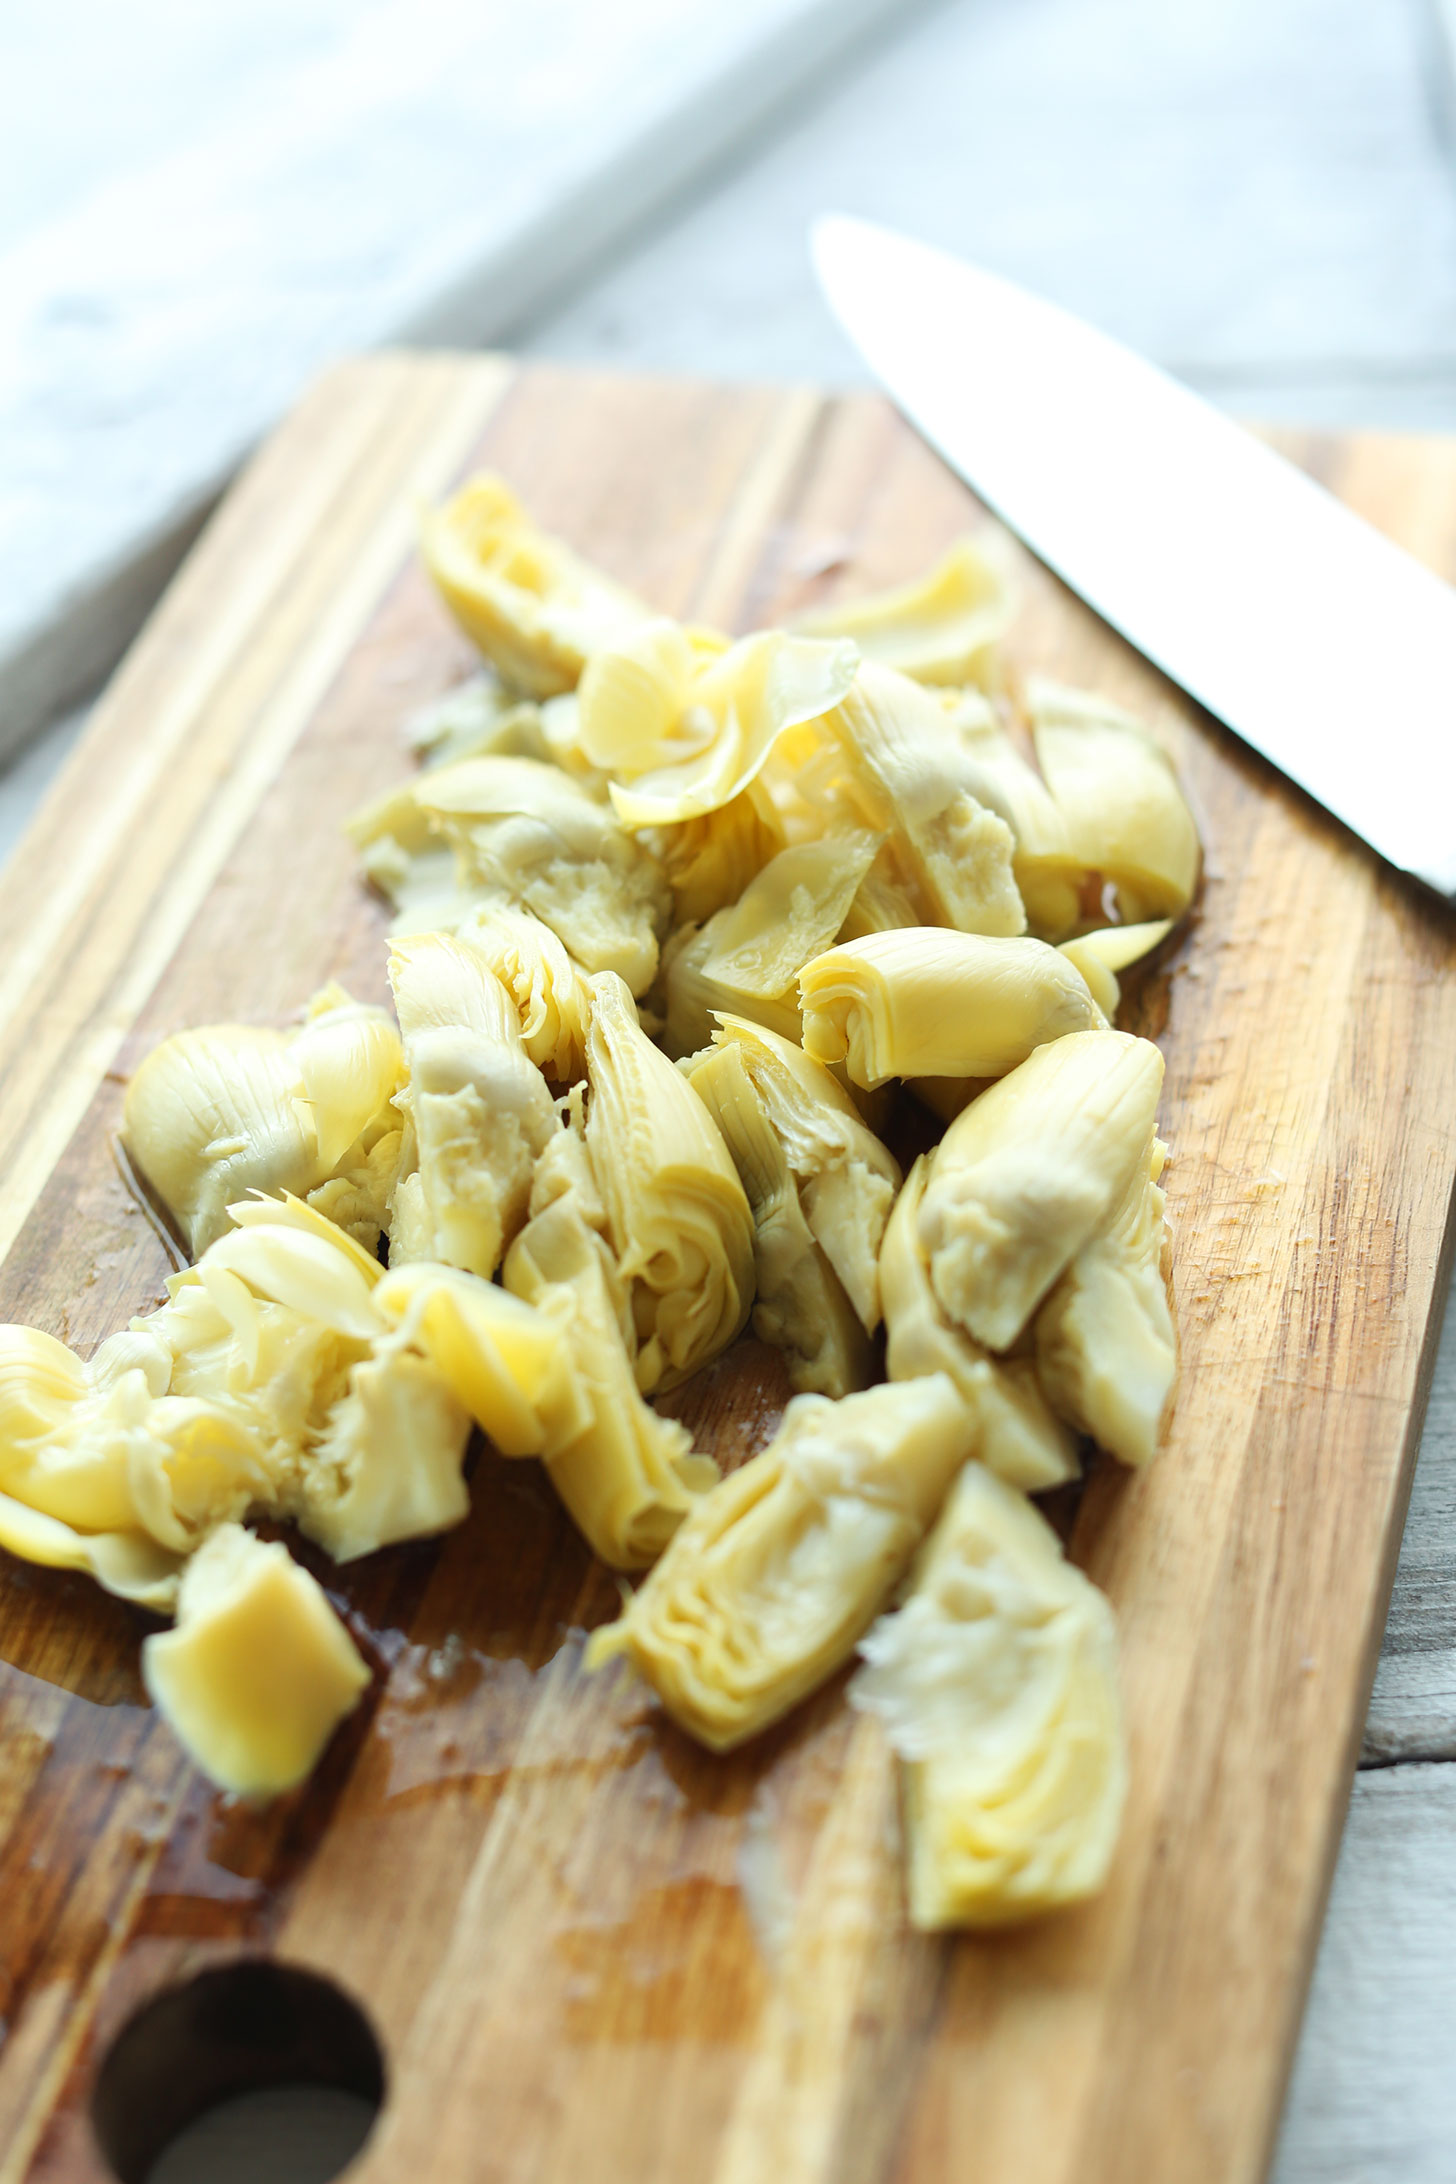 Artichoke hearts on a cutting board for making cheesy vegan artichoke dip